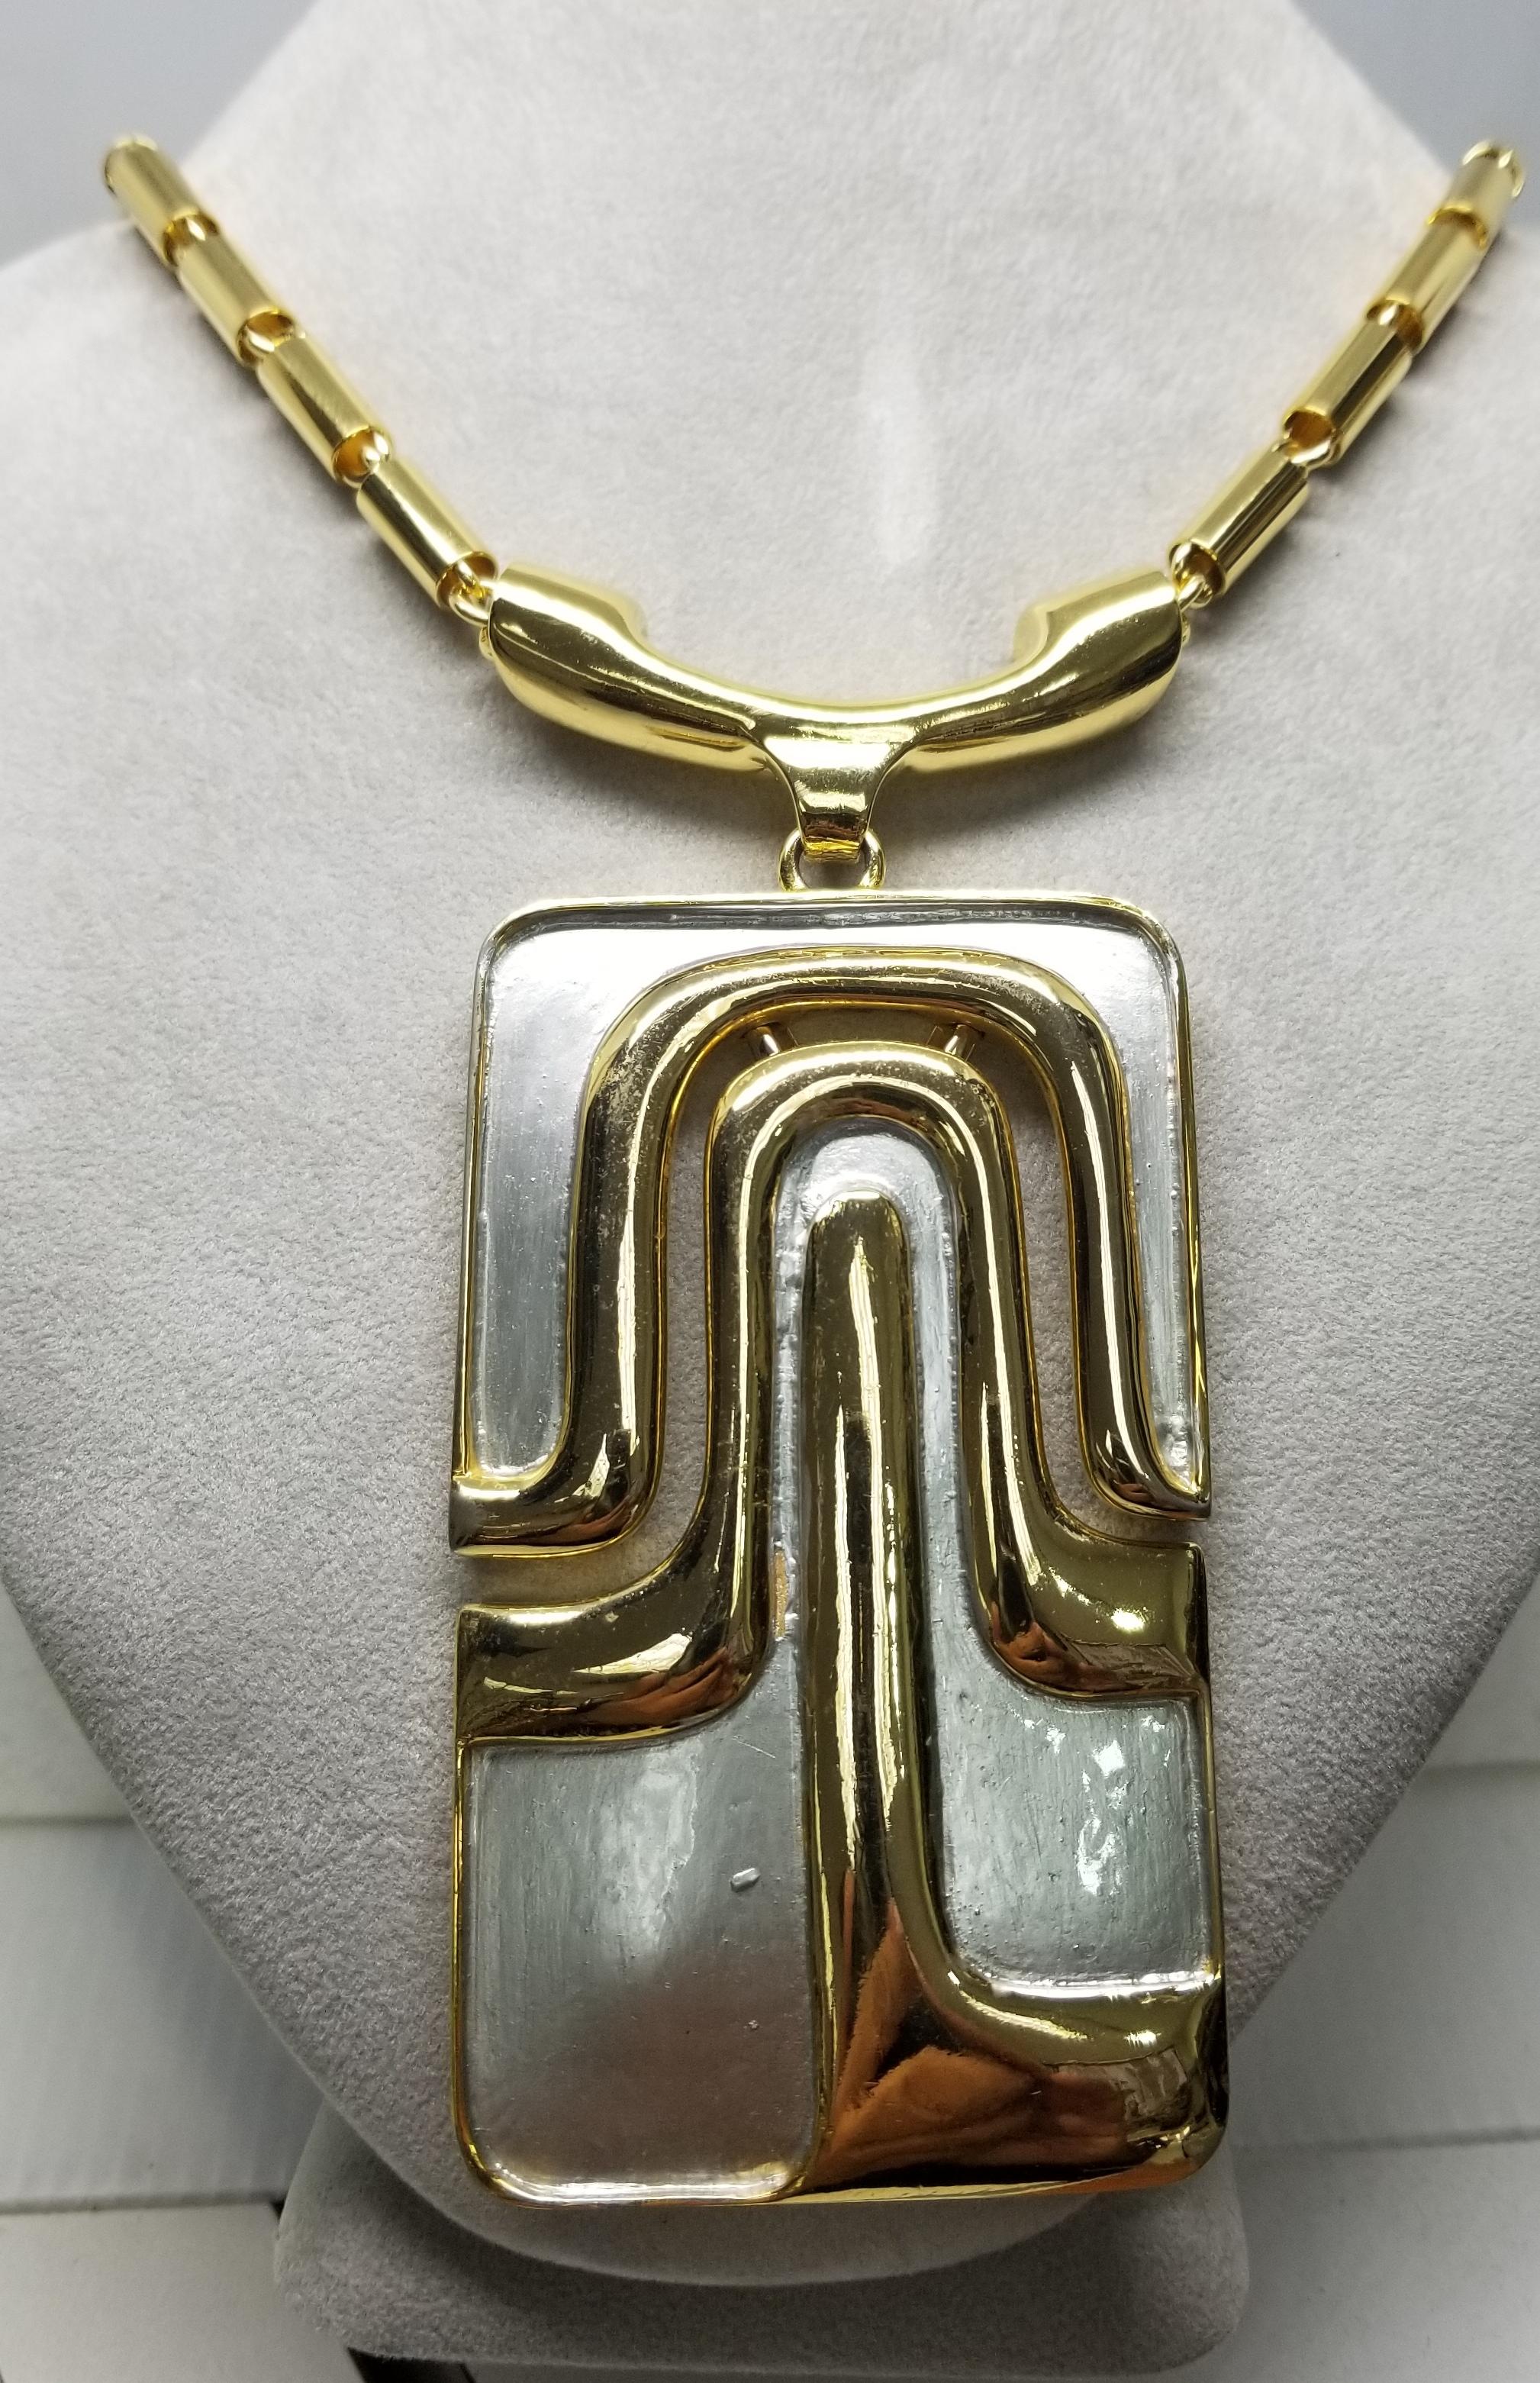 pierre cardin necklace and bracelet set